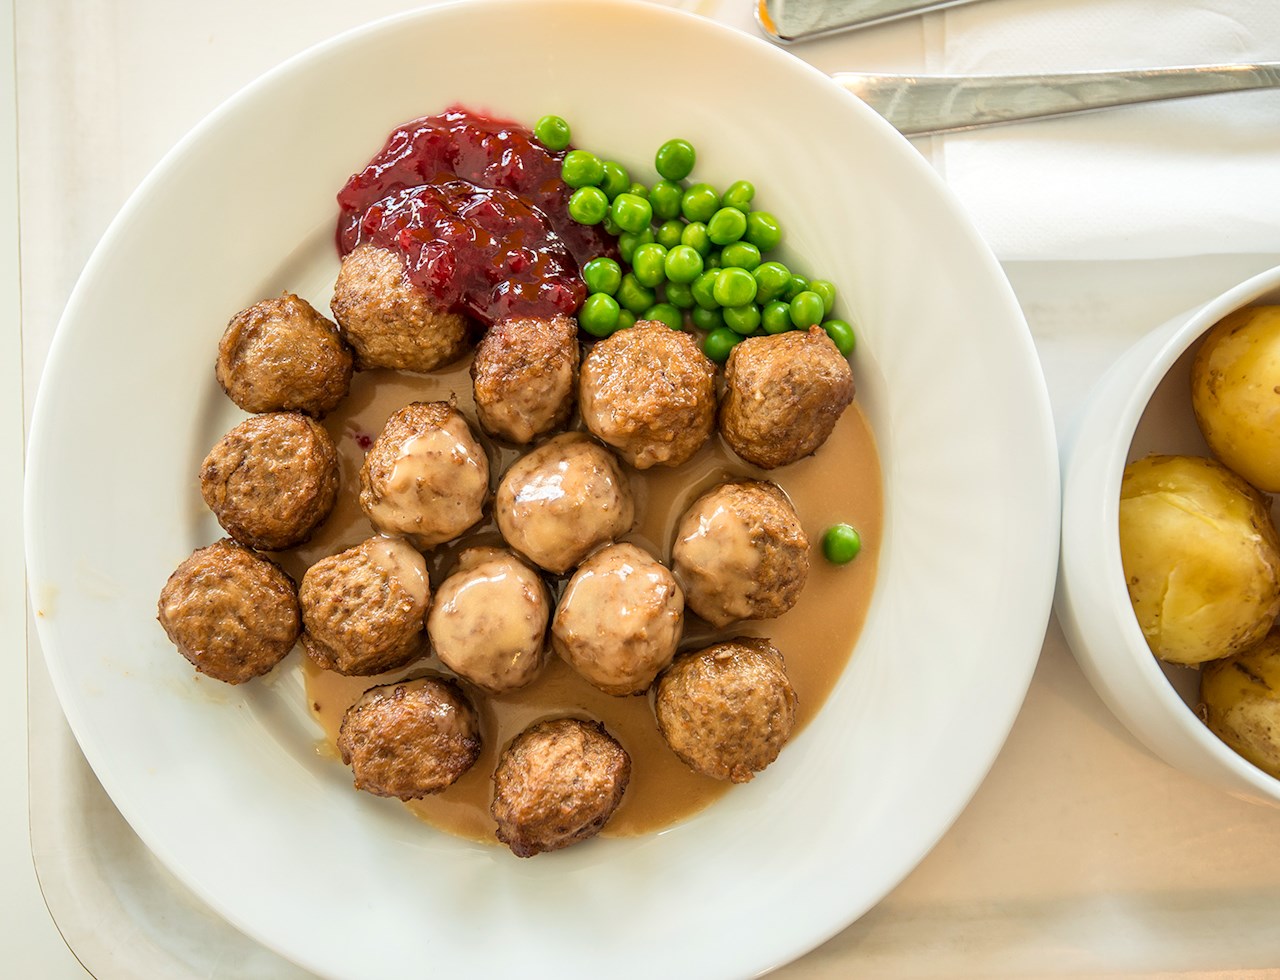 Where did Swedish meatballs originate?